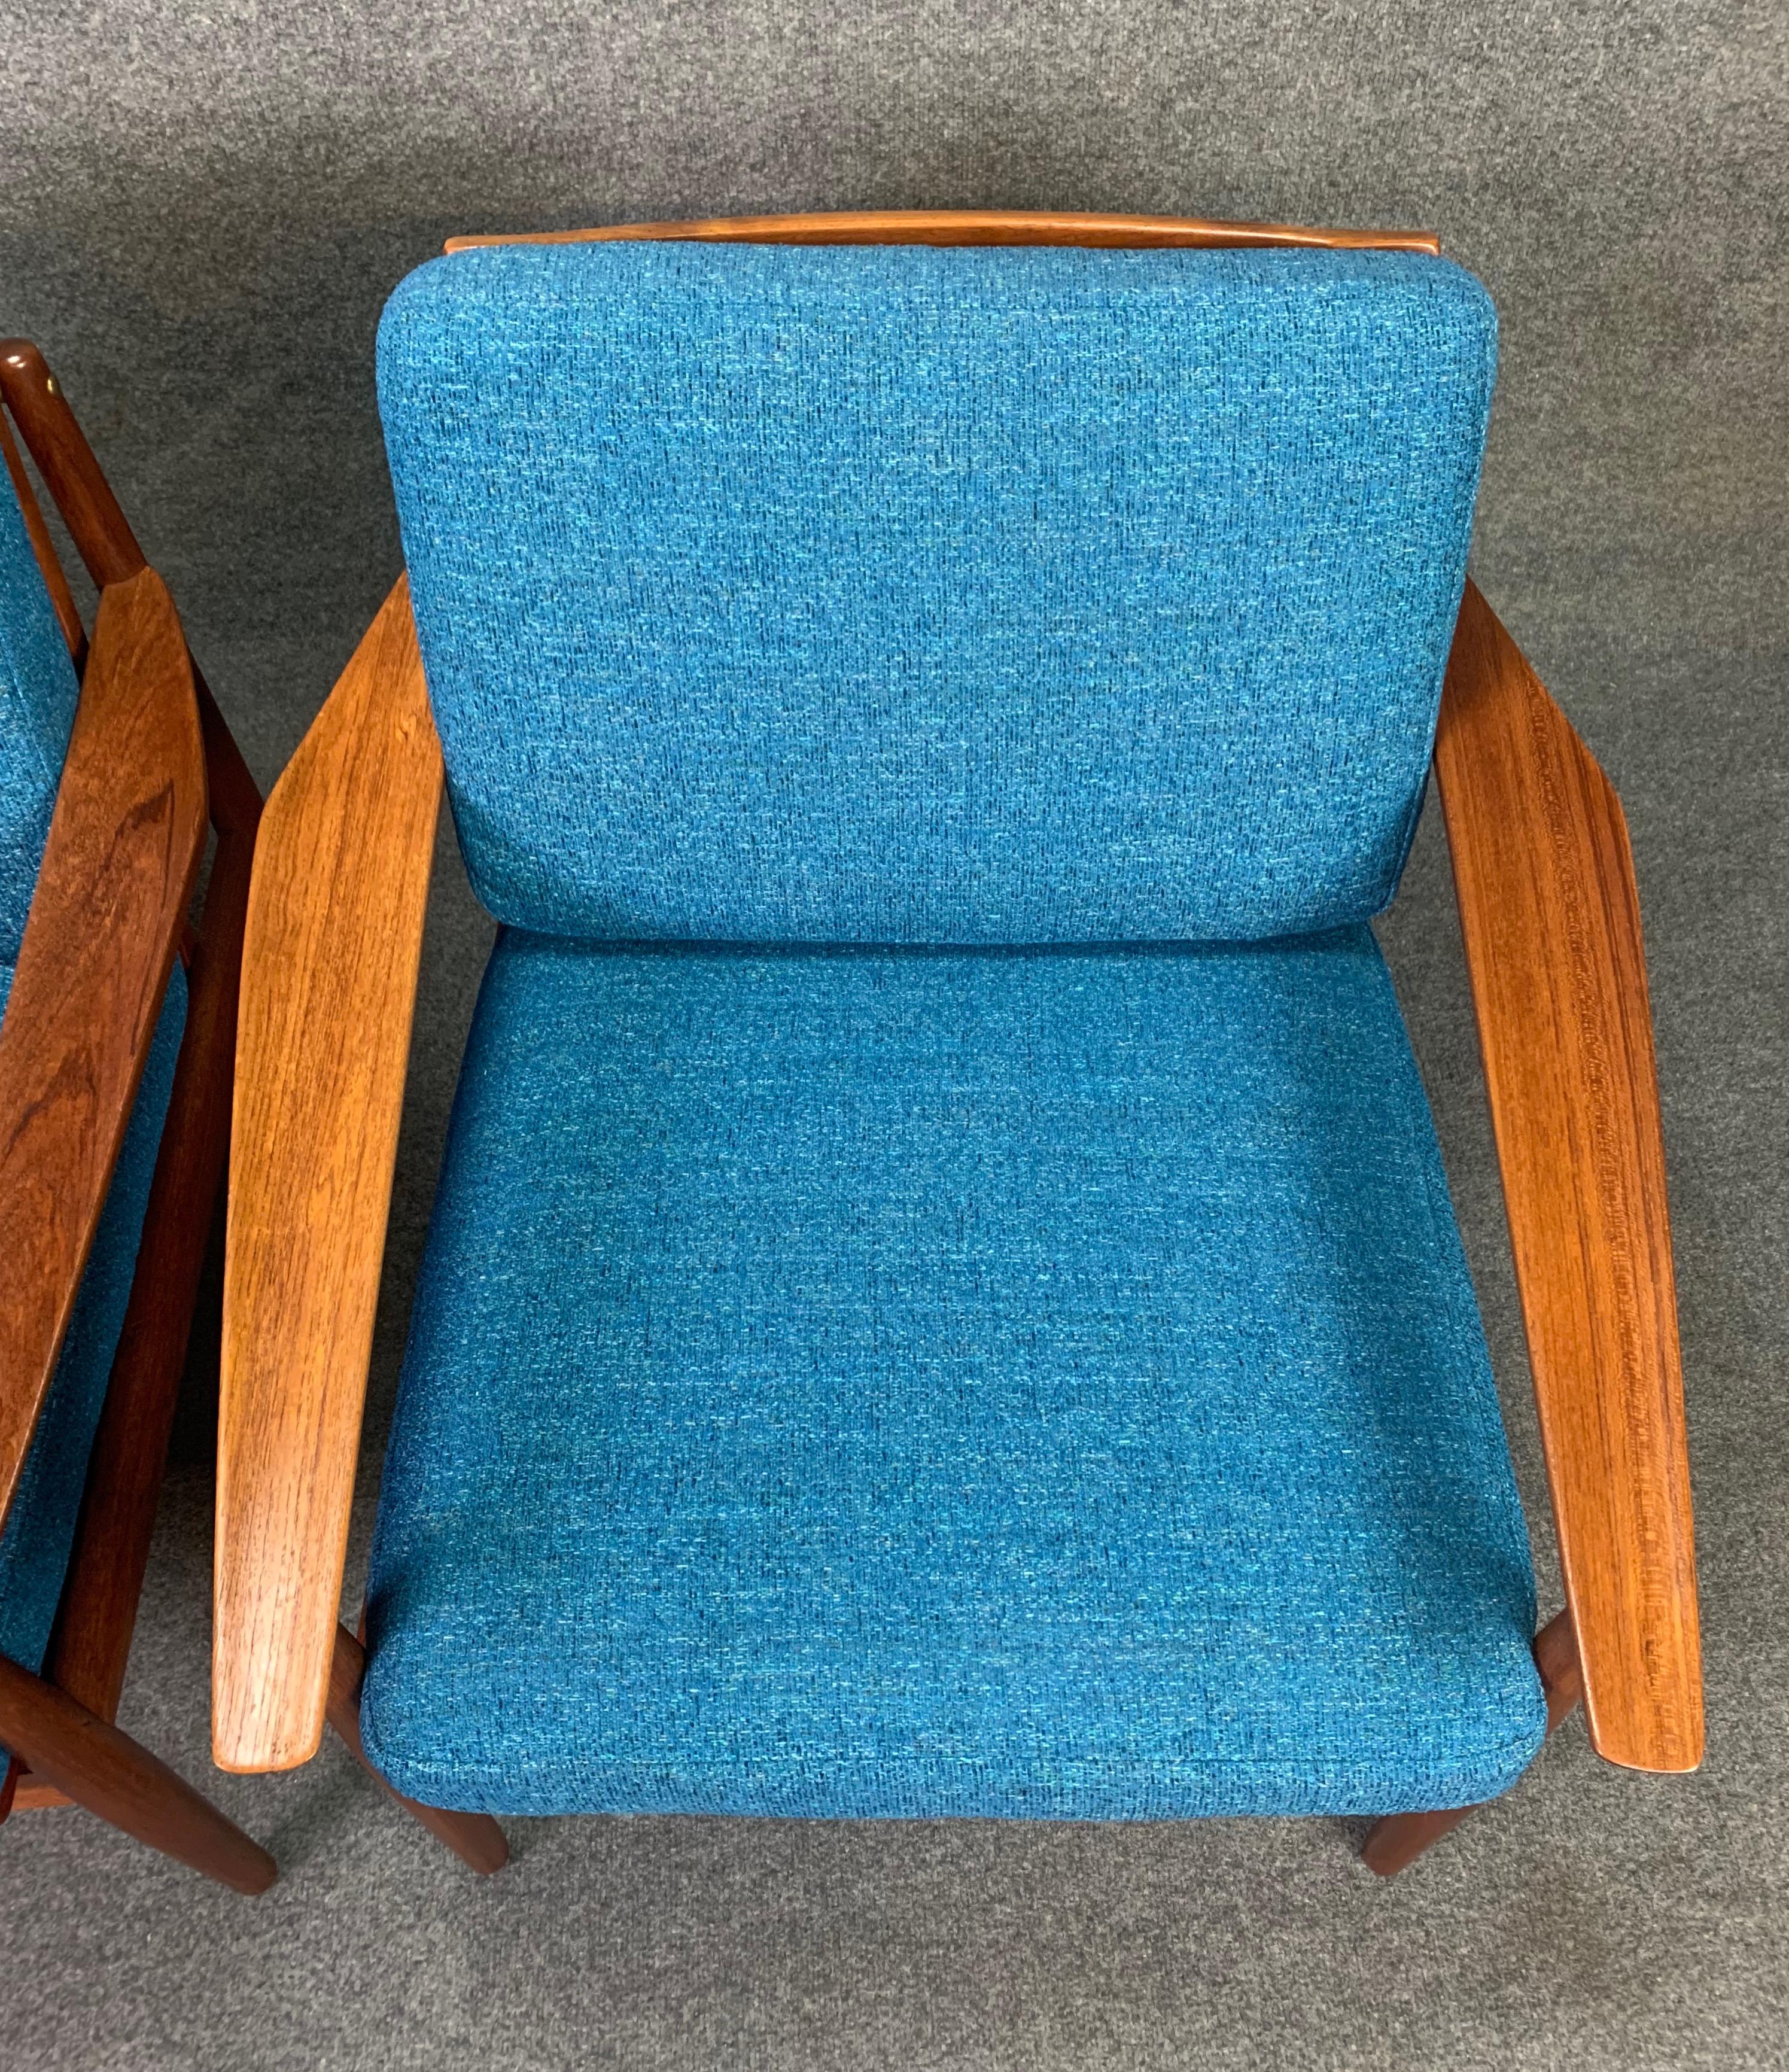 Scandinavian Modern Pair of Vintage Danish Midcentury Teak Easy Chairs by Arne Vodder for Glostrup